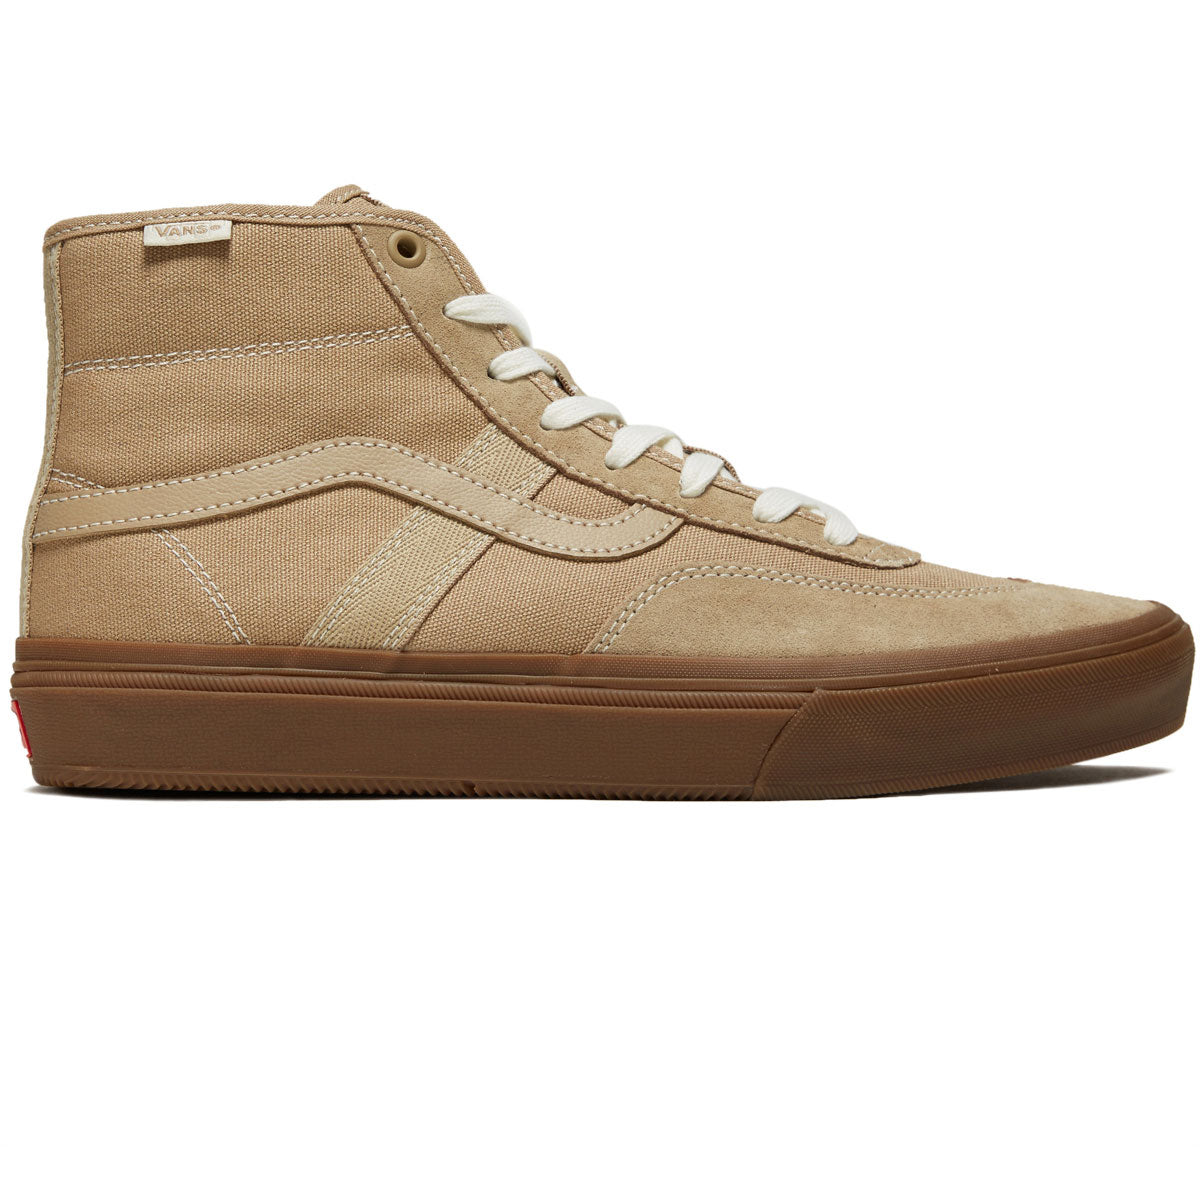 Vans Crockett High Shoes - Khaki/Gum image 1